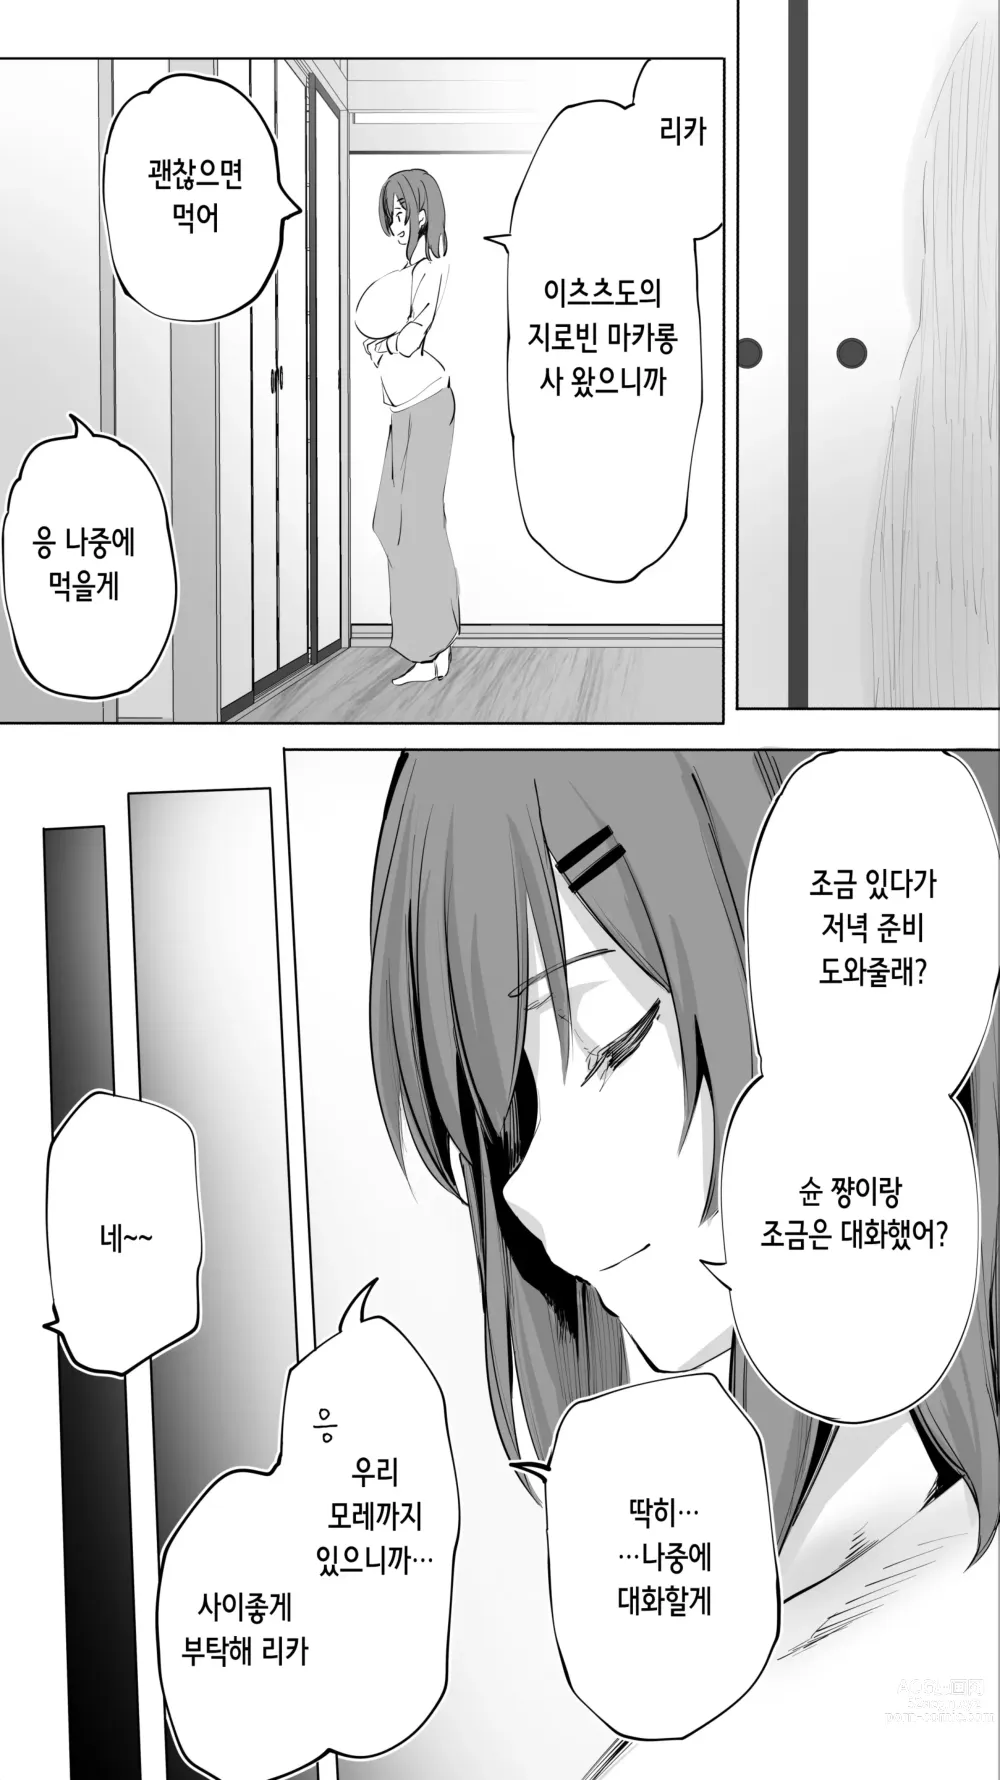 Page 61 of doujinshi 터전의 섹프 「의붓 여동생 R」